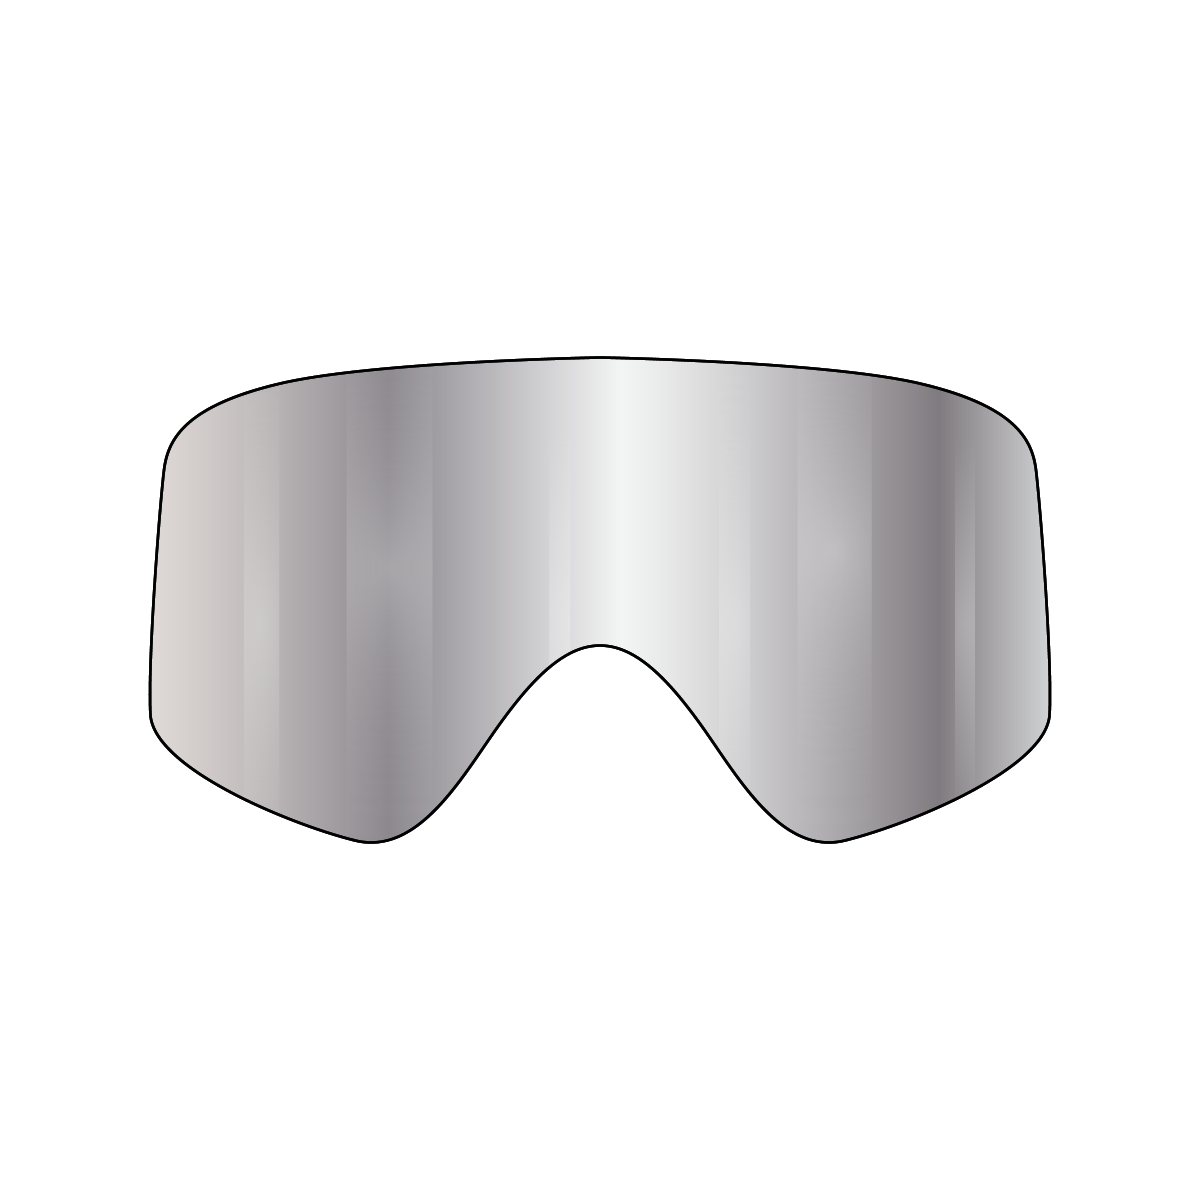 VonZipper Porkchop Spare Injected Lens - Gray Chrome